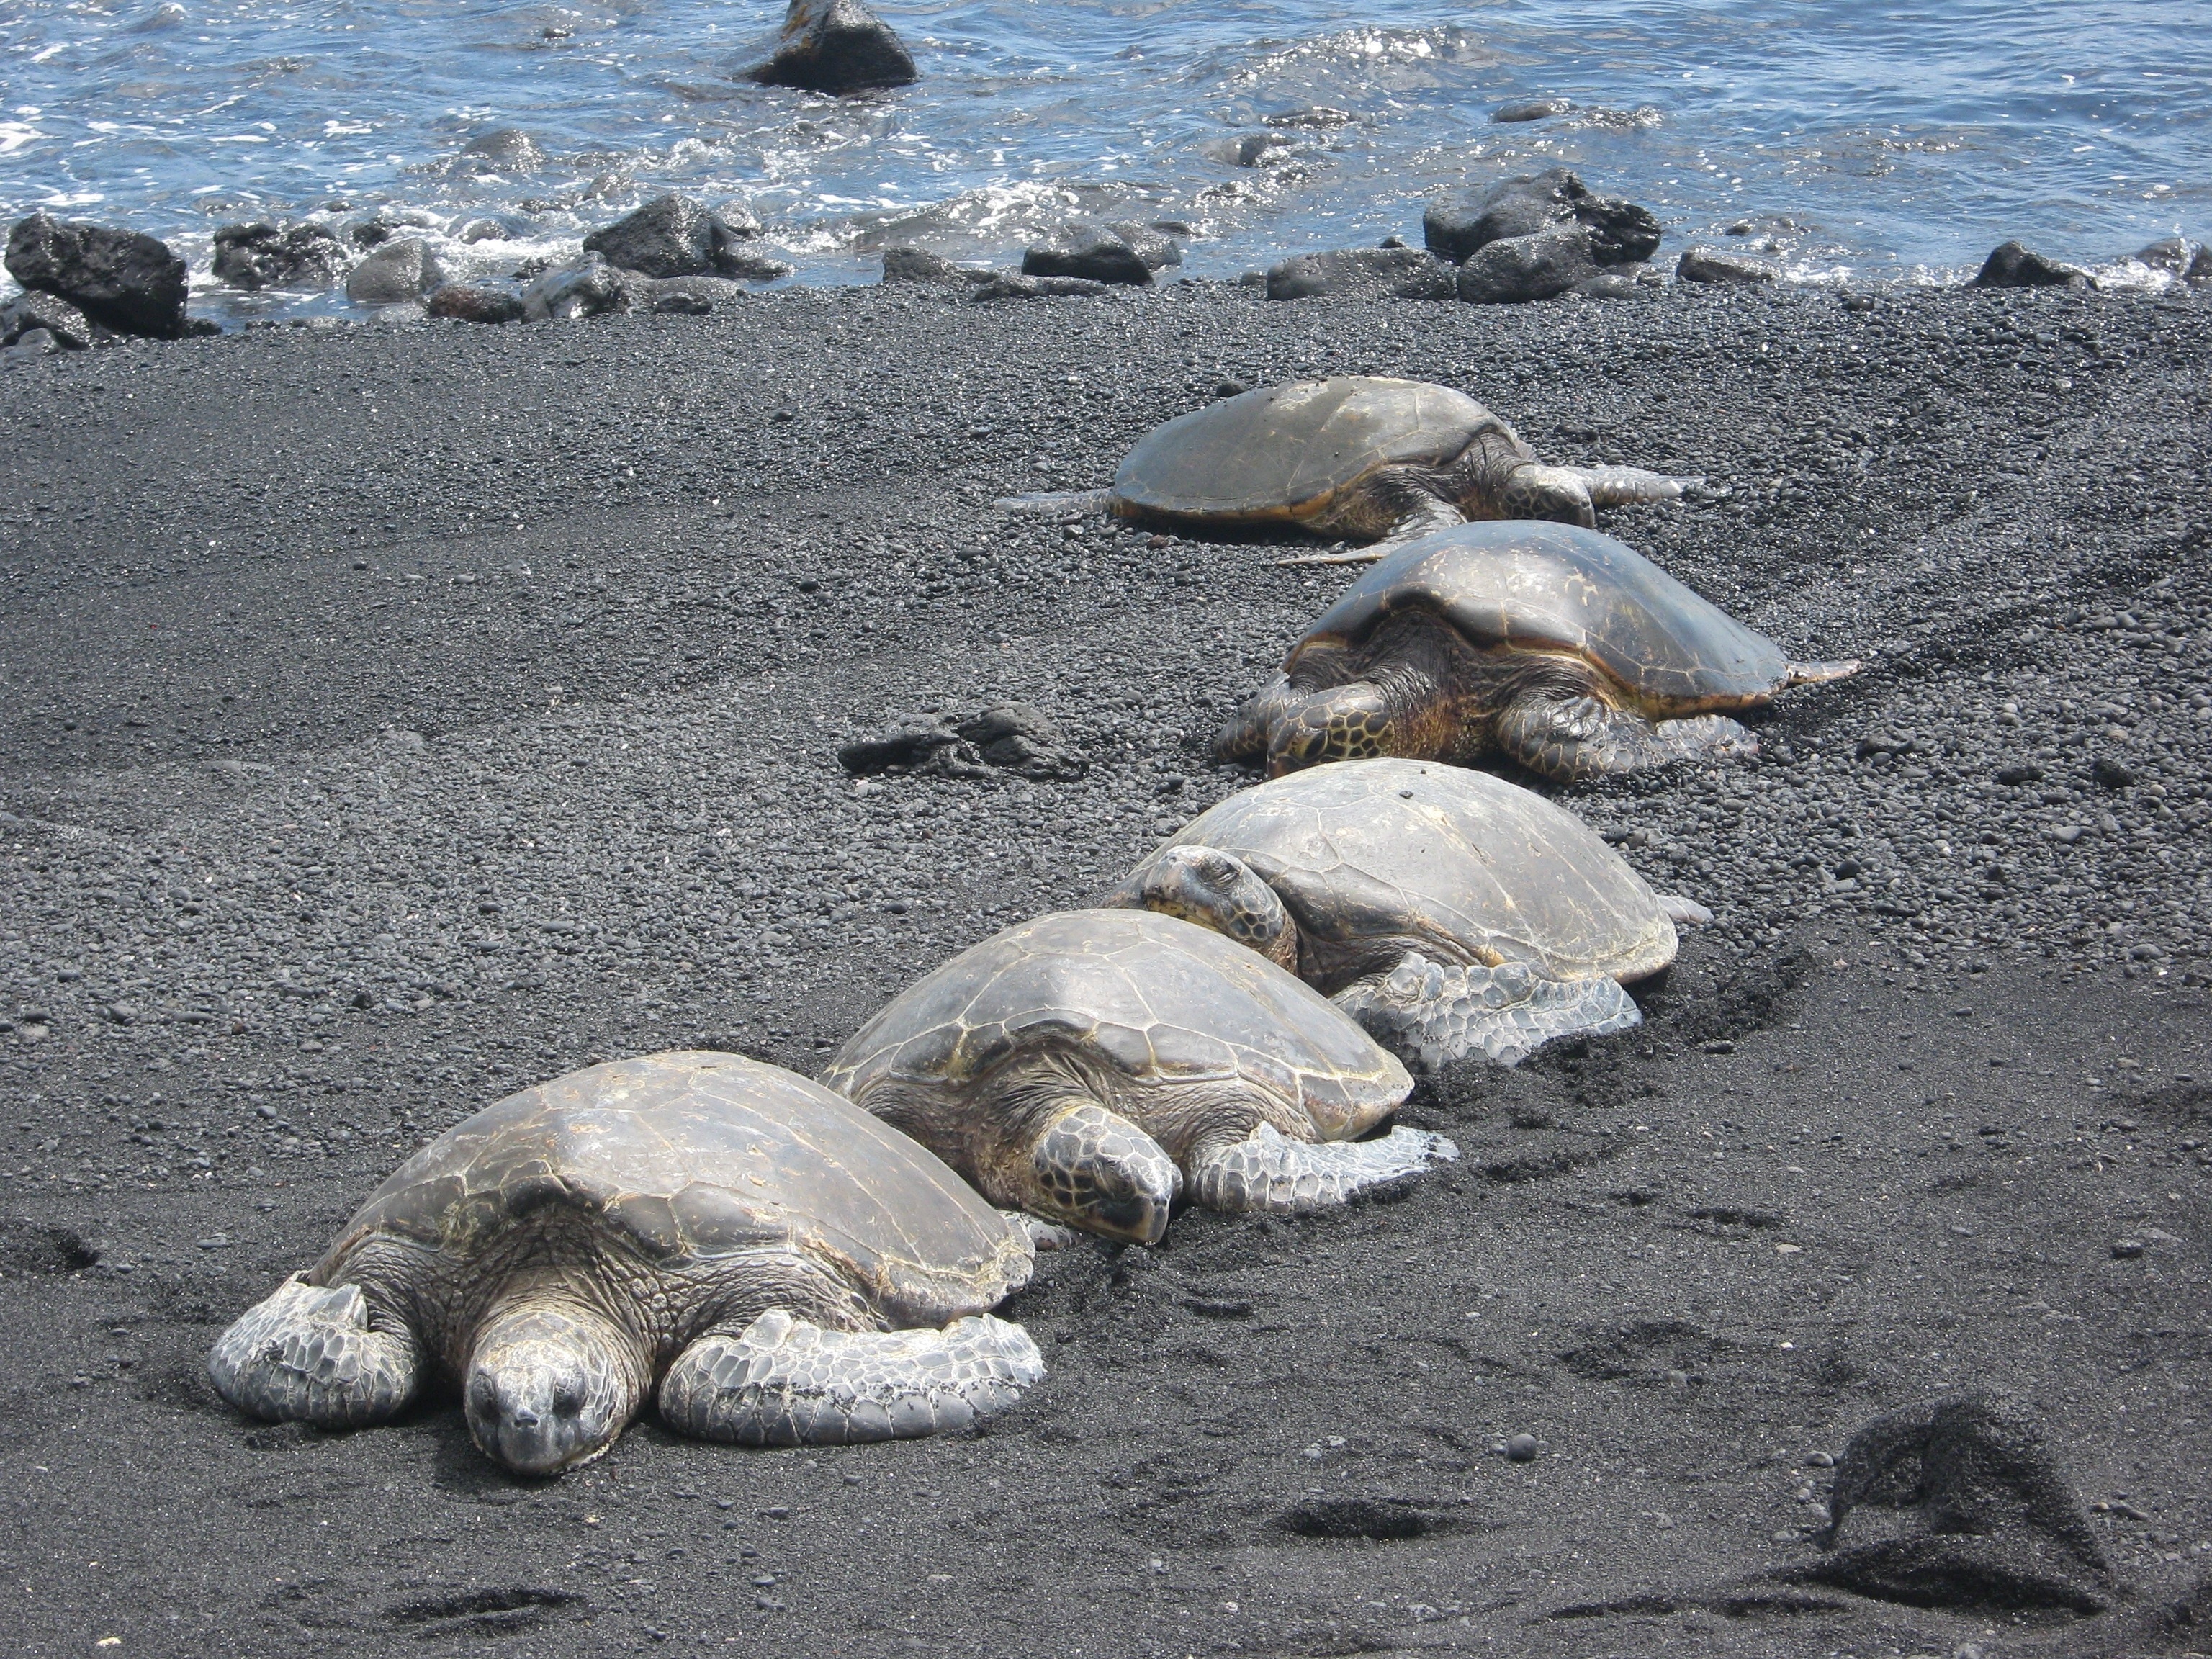 sea turtles on seashore during daytime